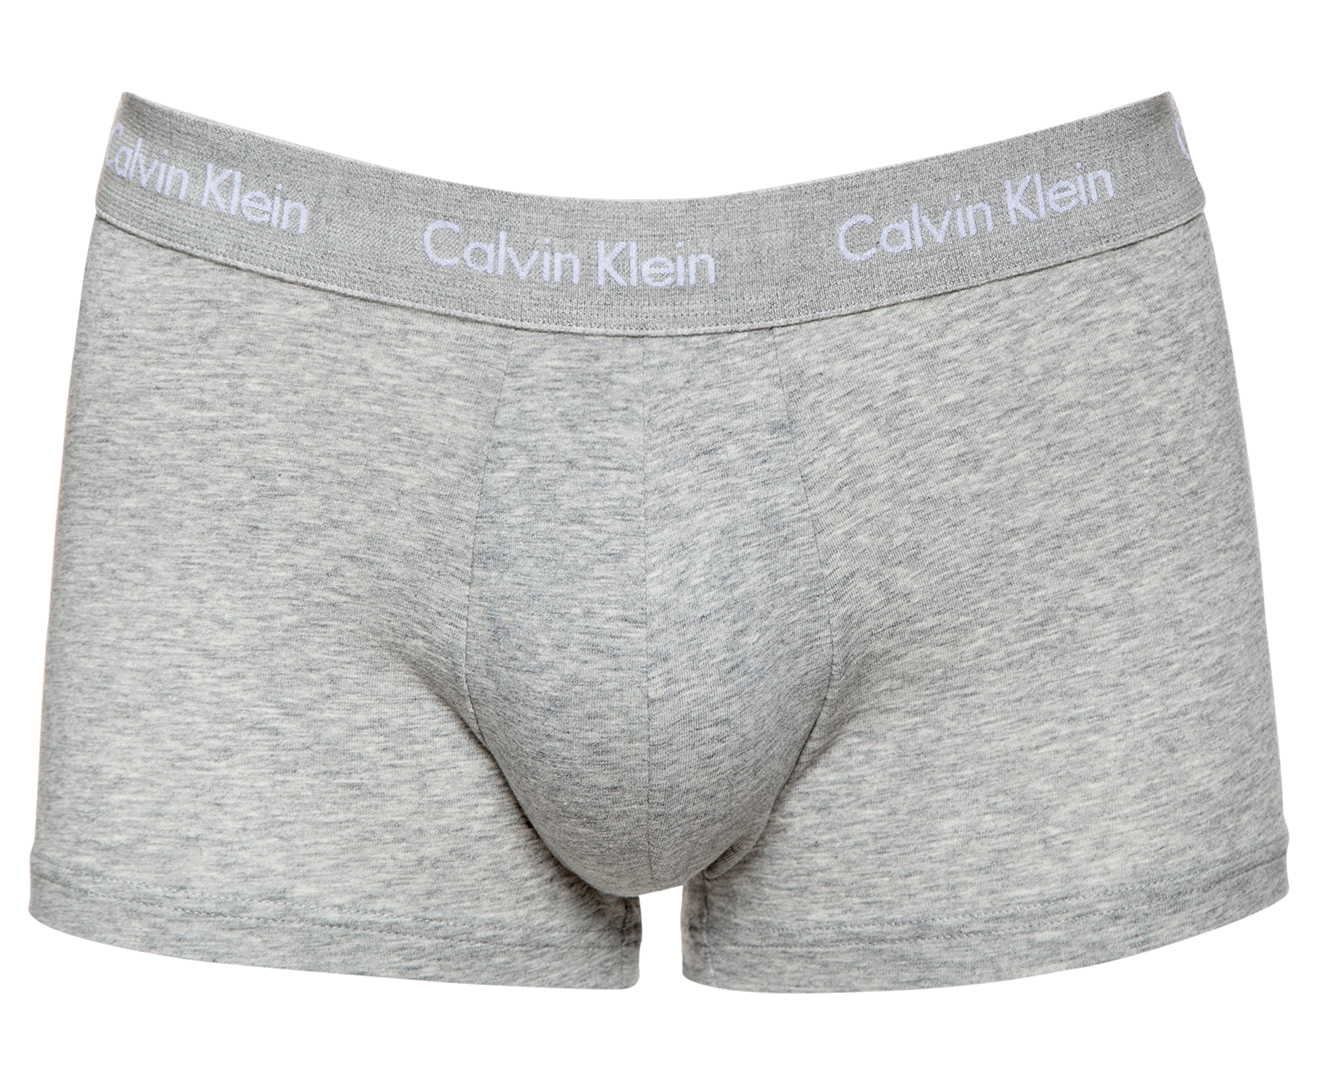 Calvin Klein Men's Cotton Stretch Low Rise Trunk 3-Pack - Grey  Heather/Wisdom/Neptune .au